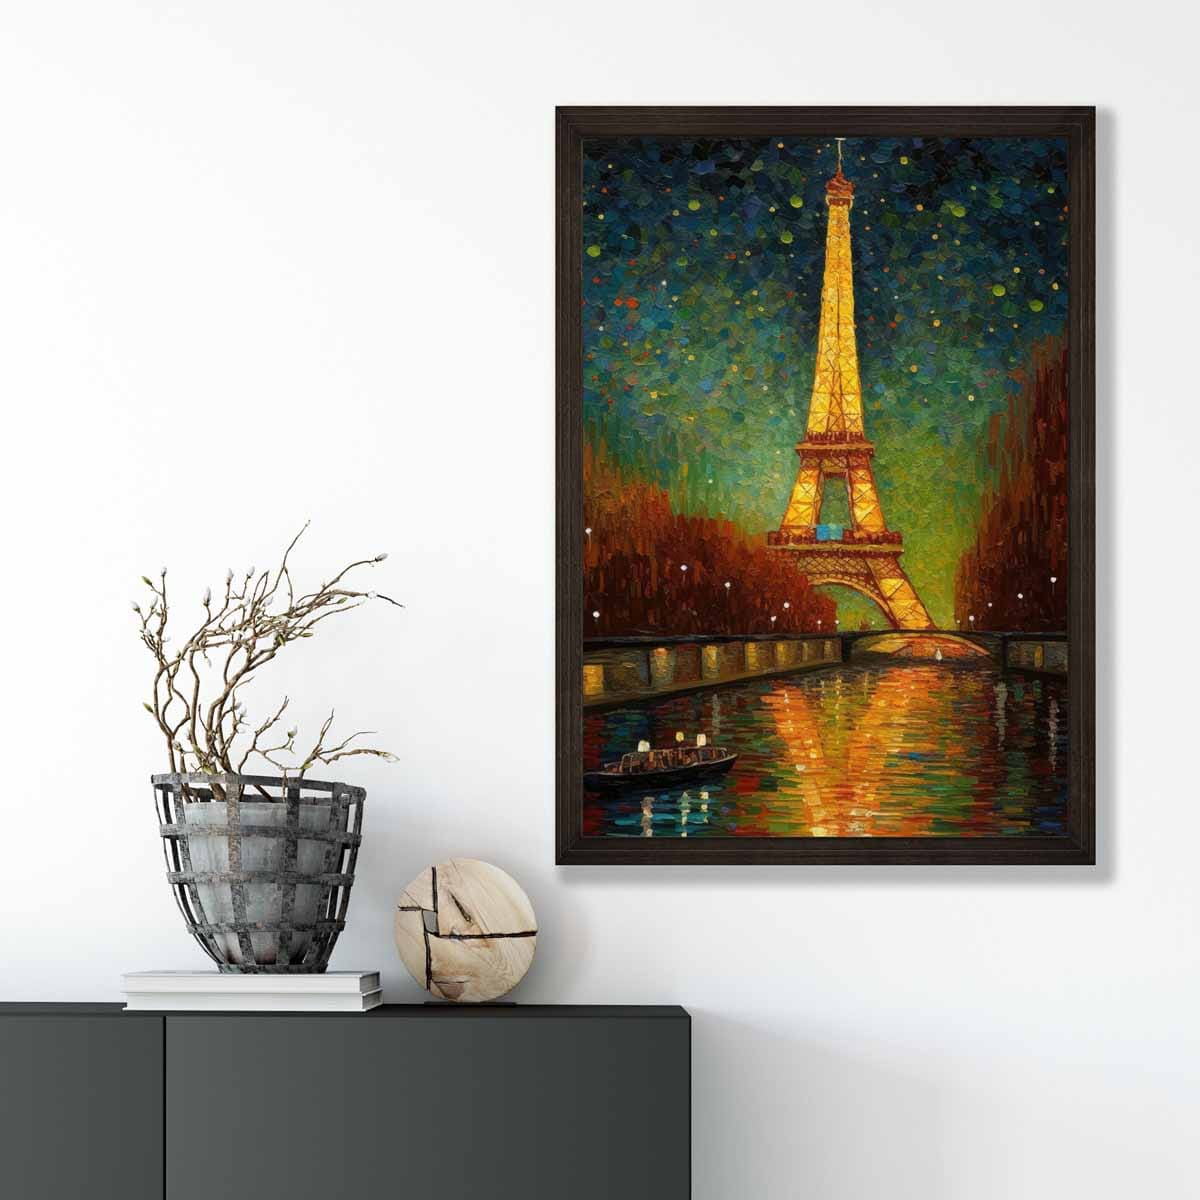 Colourful Painting Art Print of Paris at Night